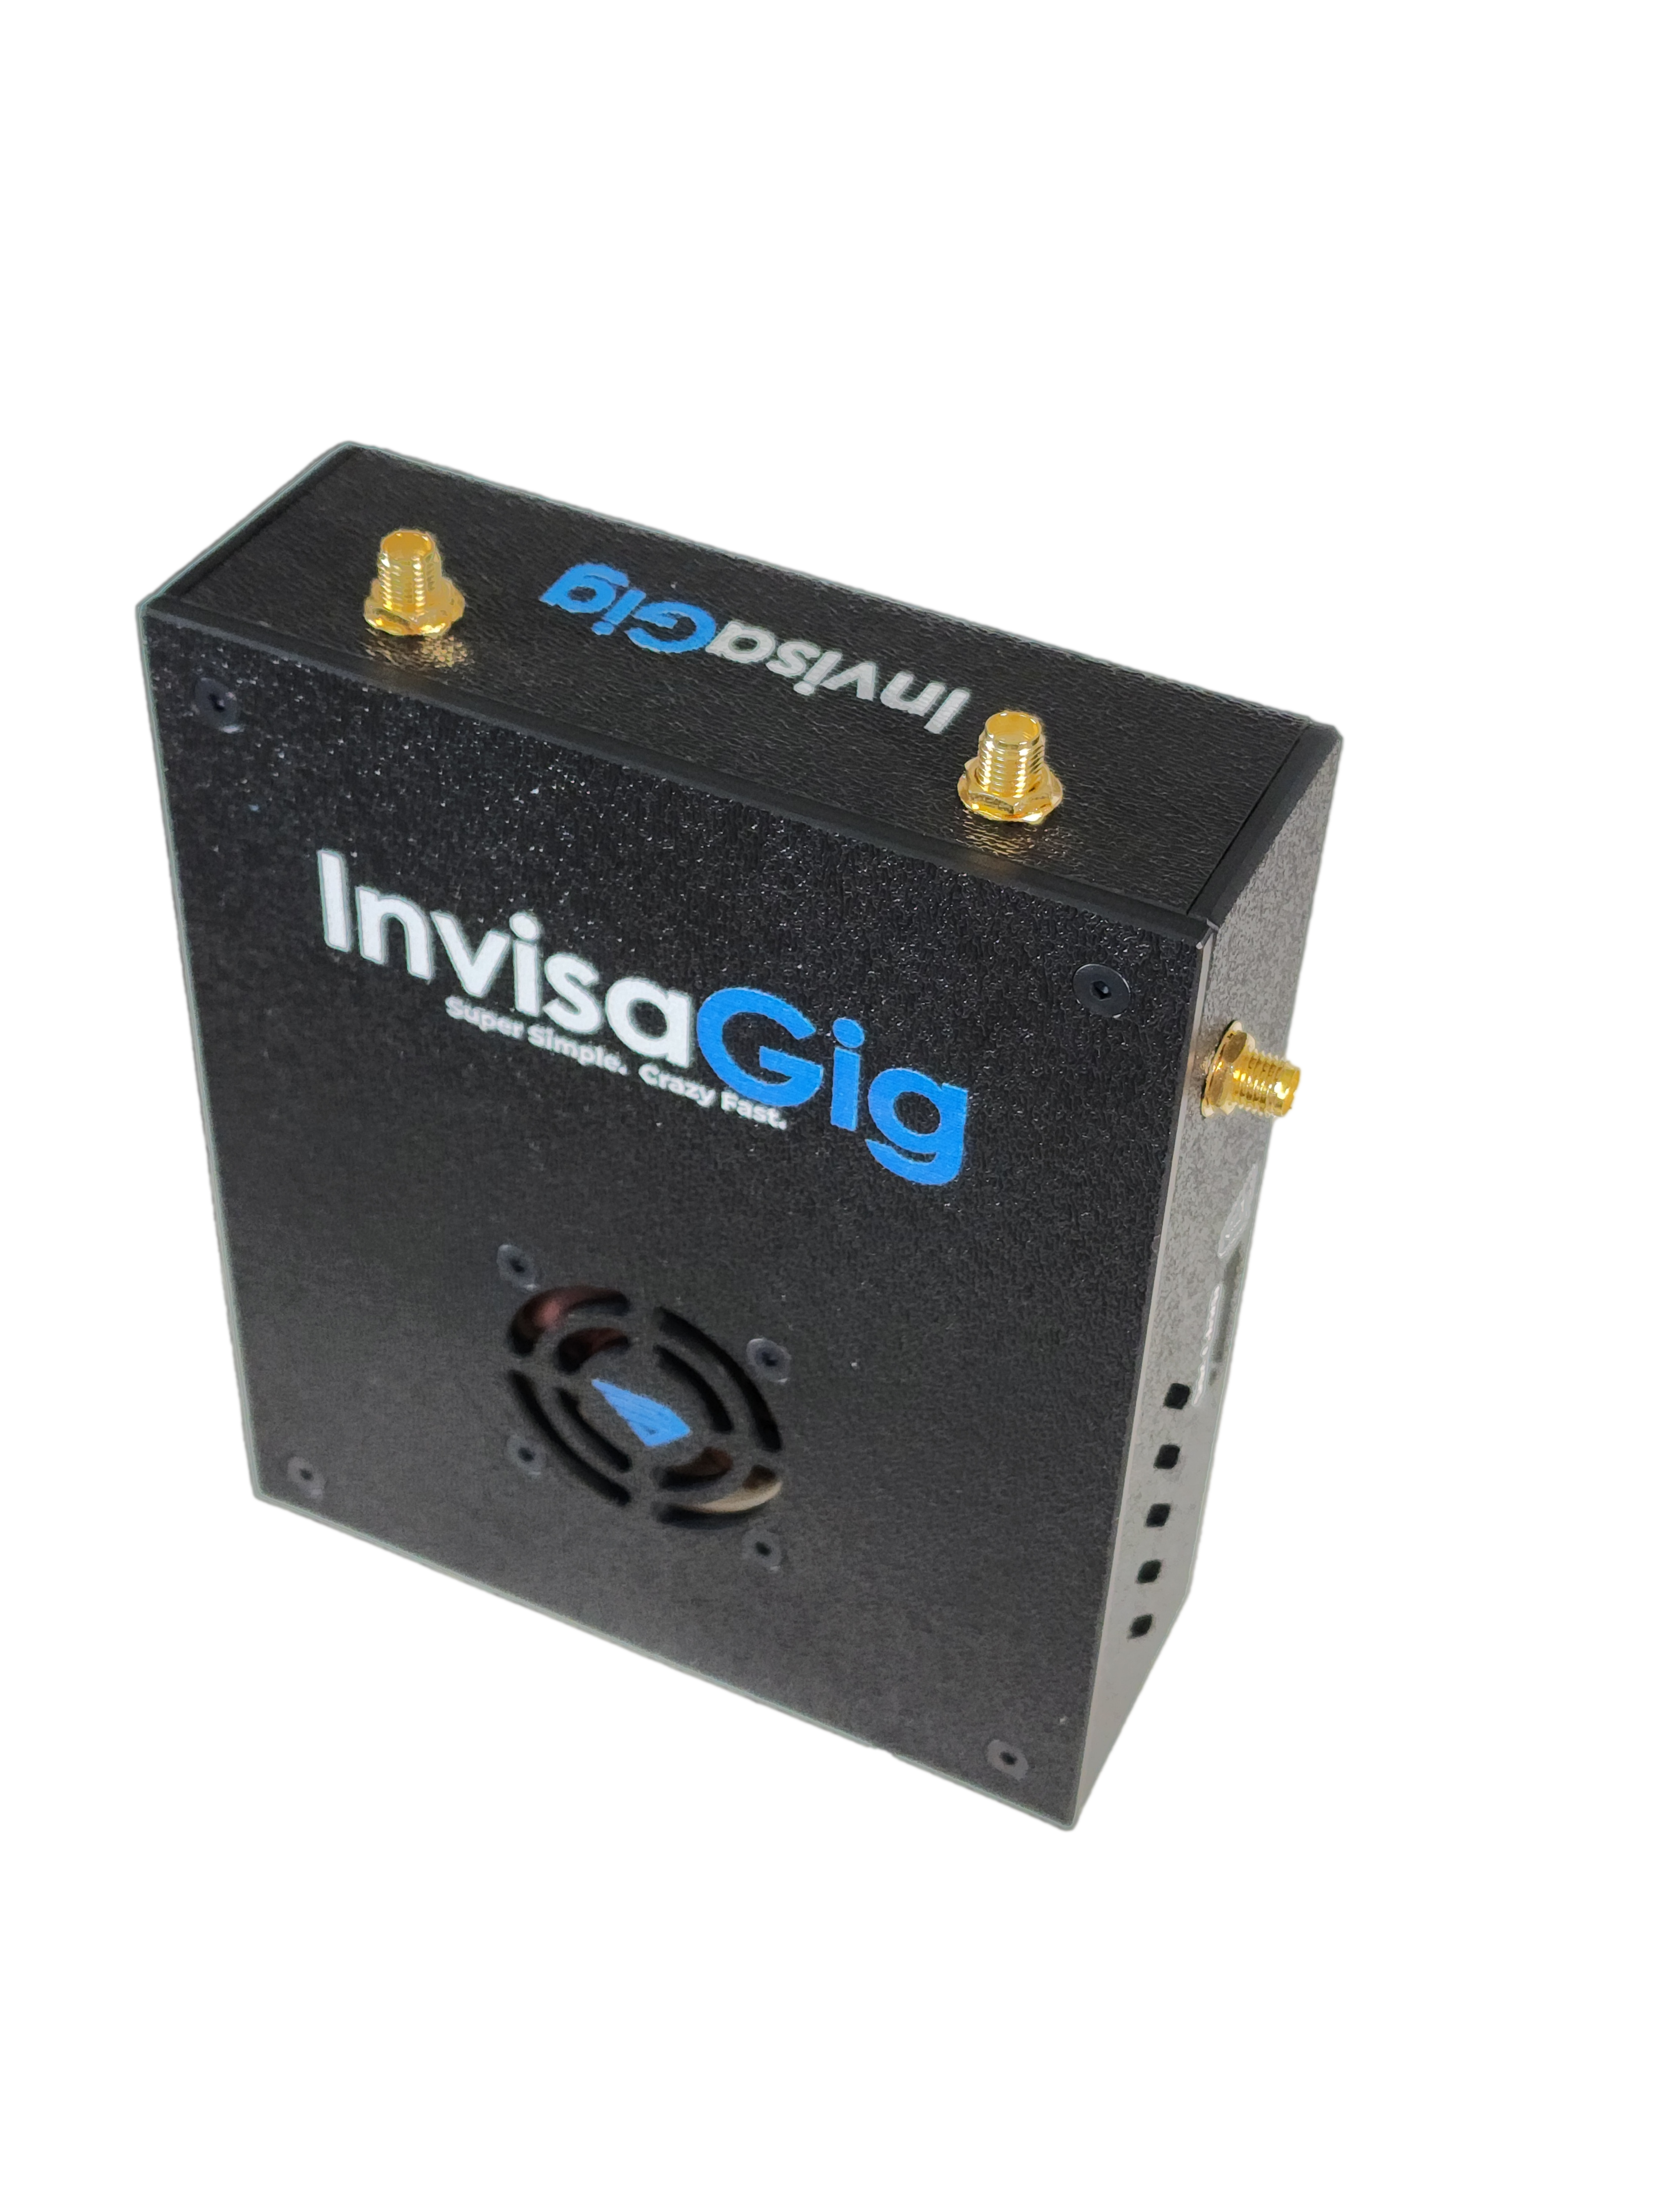 Refurbished - The InvisaGig - 5G Wireless High Speed Modem System - Super Simple, Crazy Fast